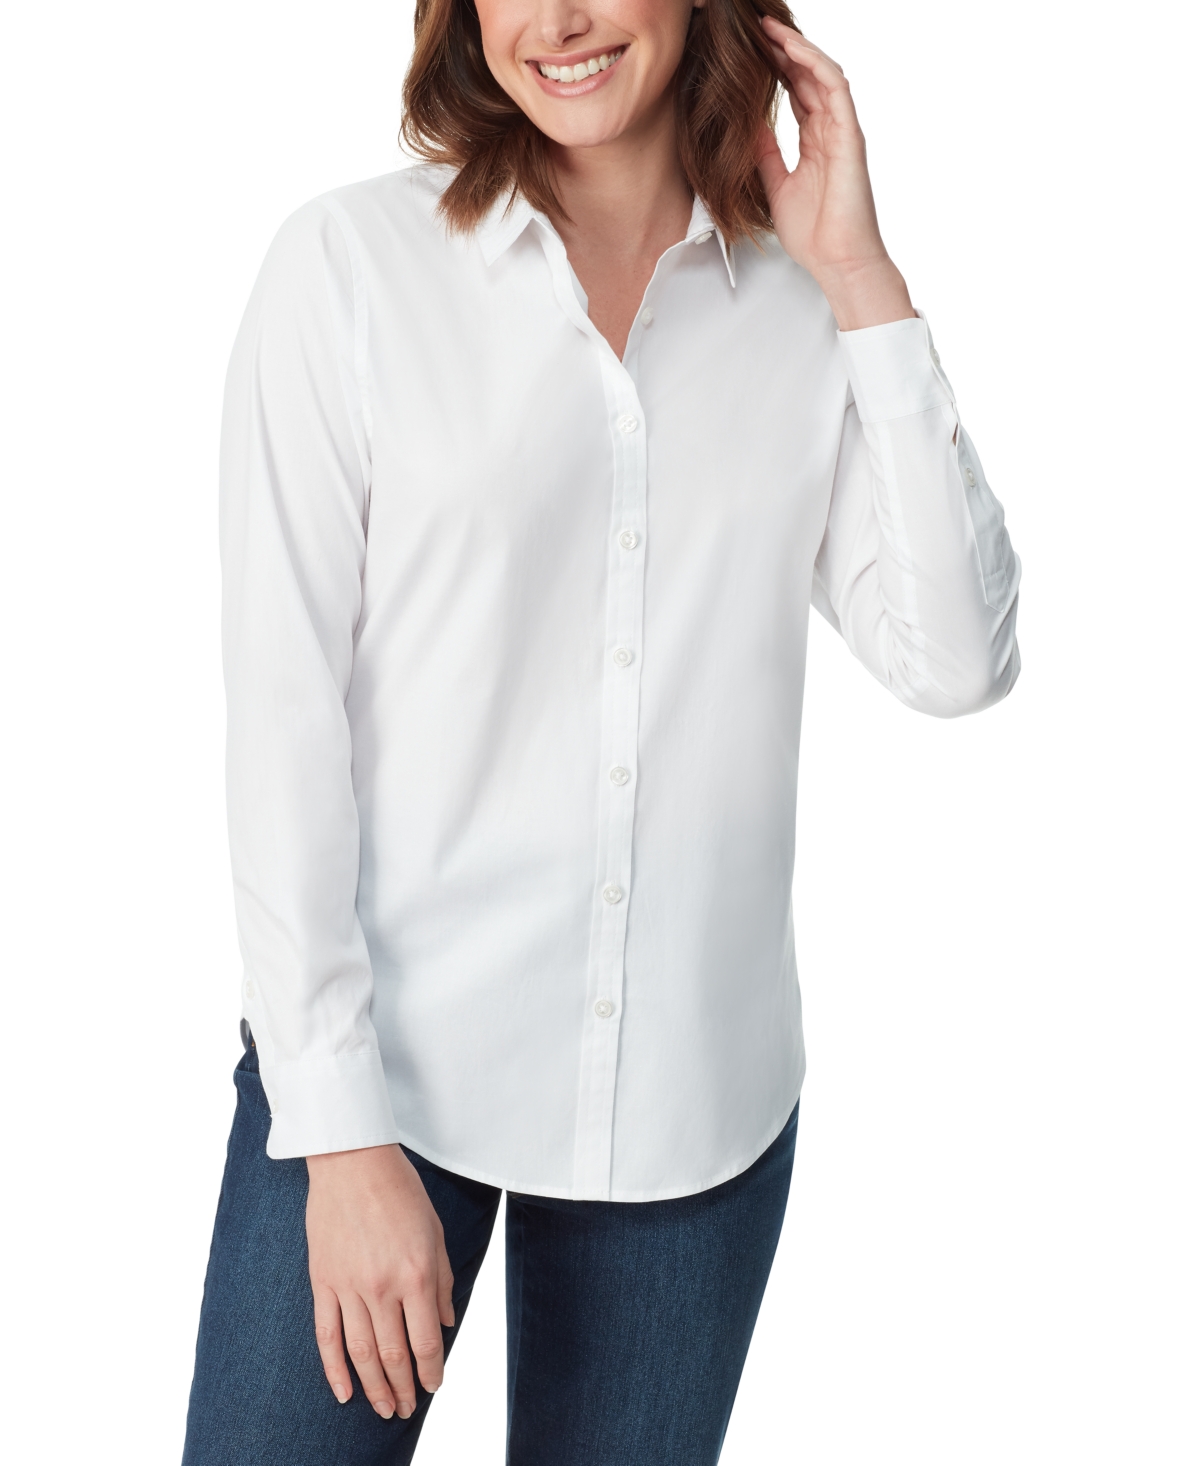 Women's Amanda Long-Sleeve Fitted Shirt - Vintage White Polka Dot